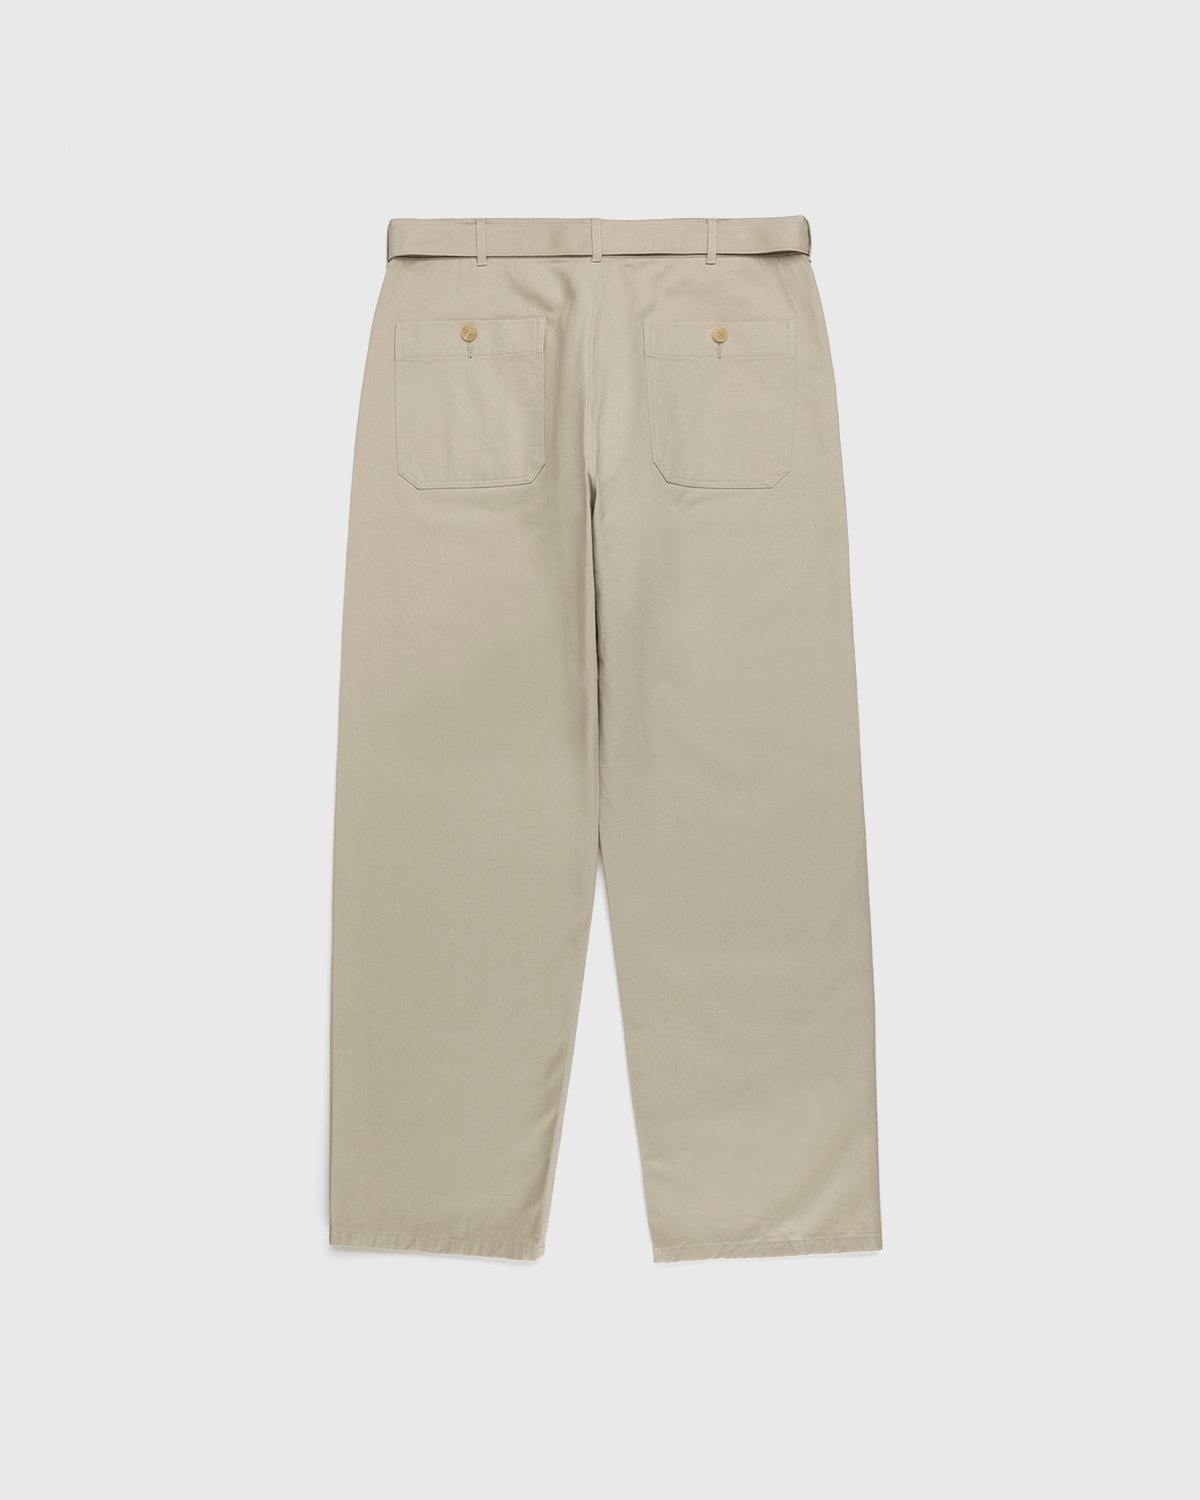 Auralee – Cotton Woven Pants Khaki - Trousers - Multi - Image 2